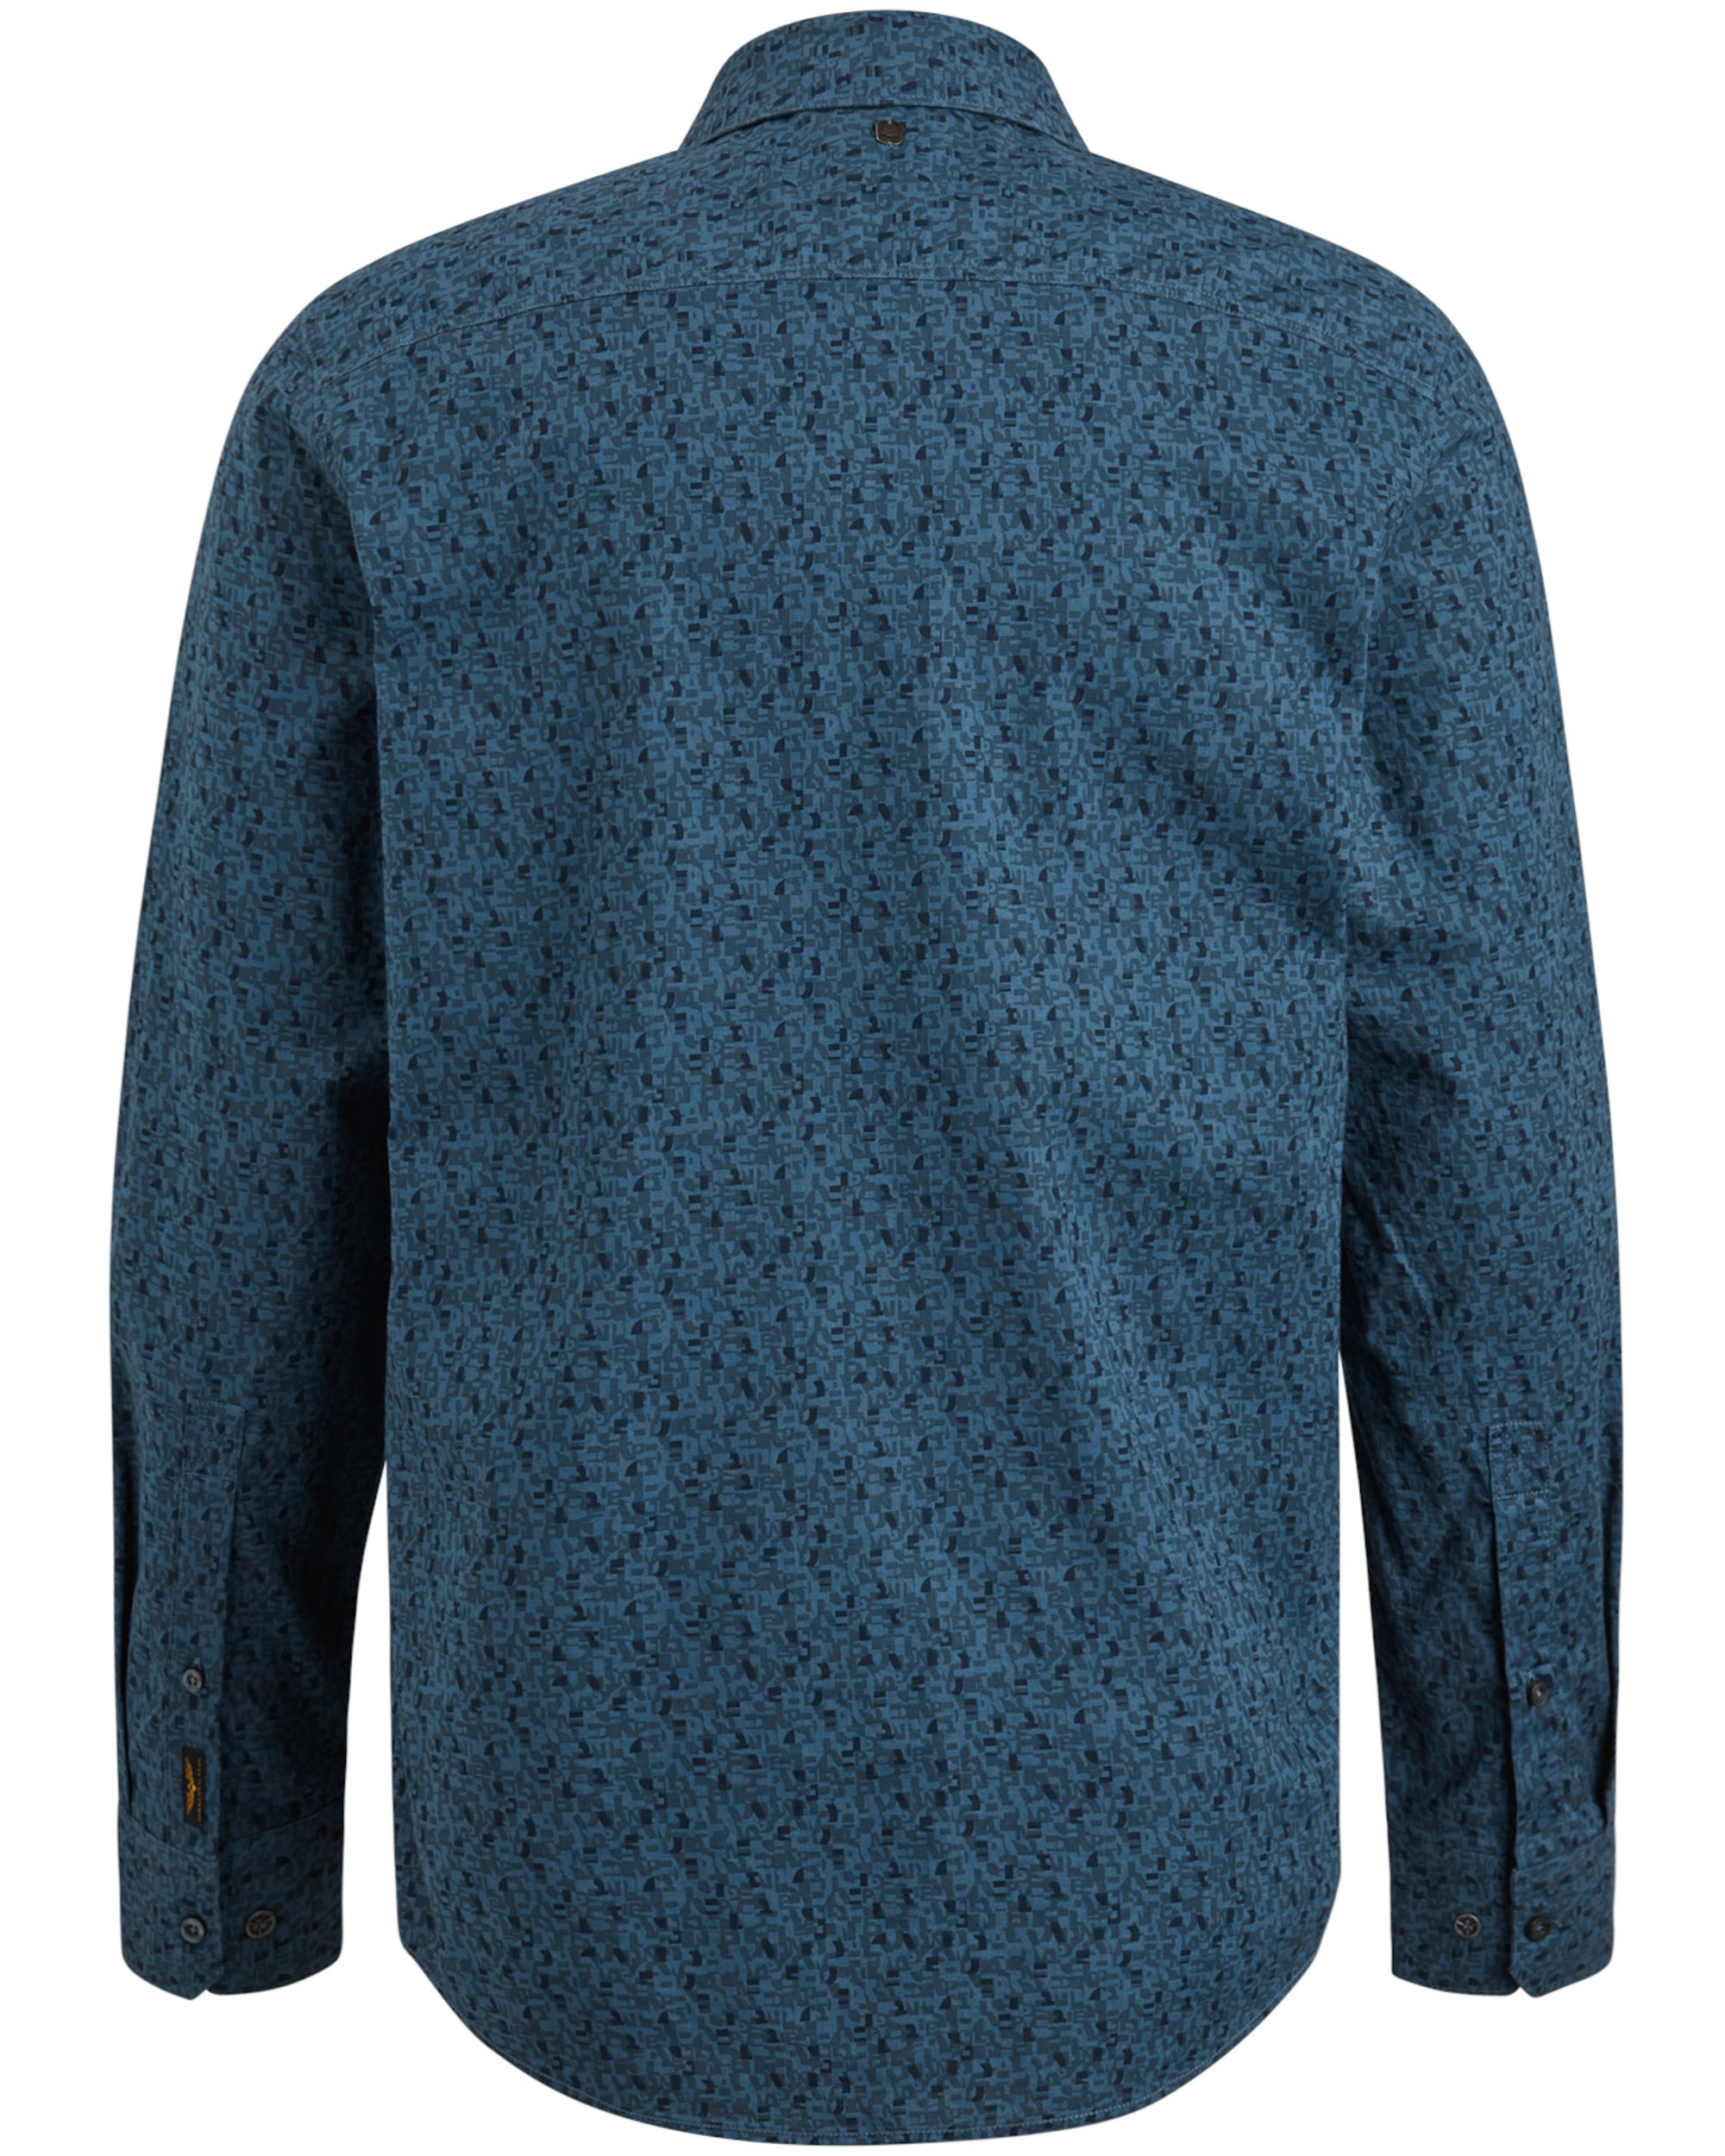 PME Legend Casual Overhemd LM Blauw 092330-001-L